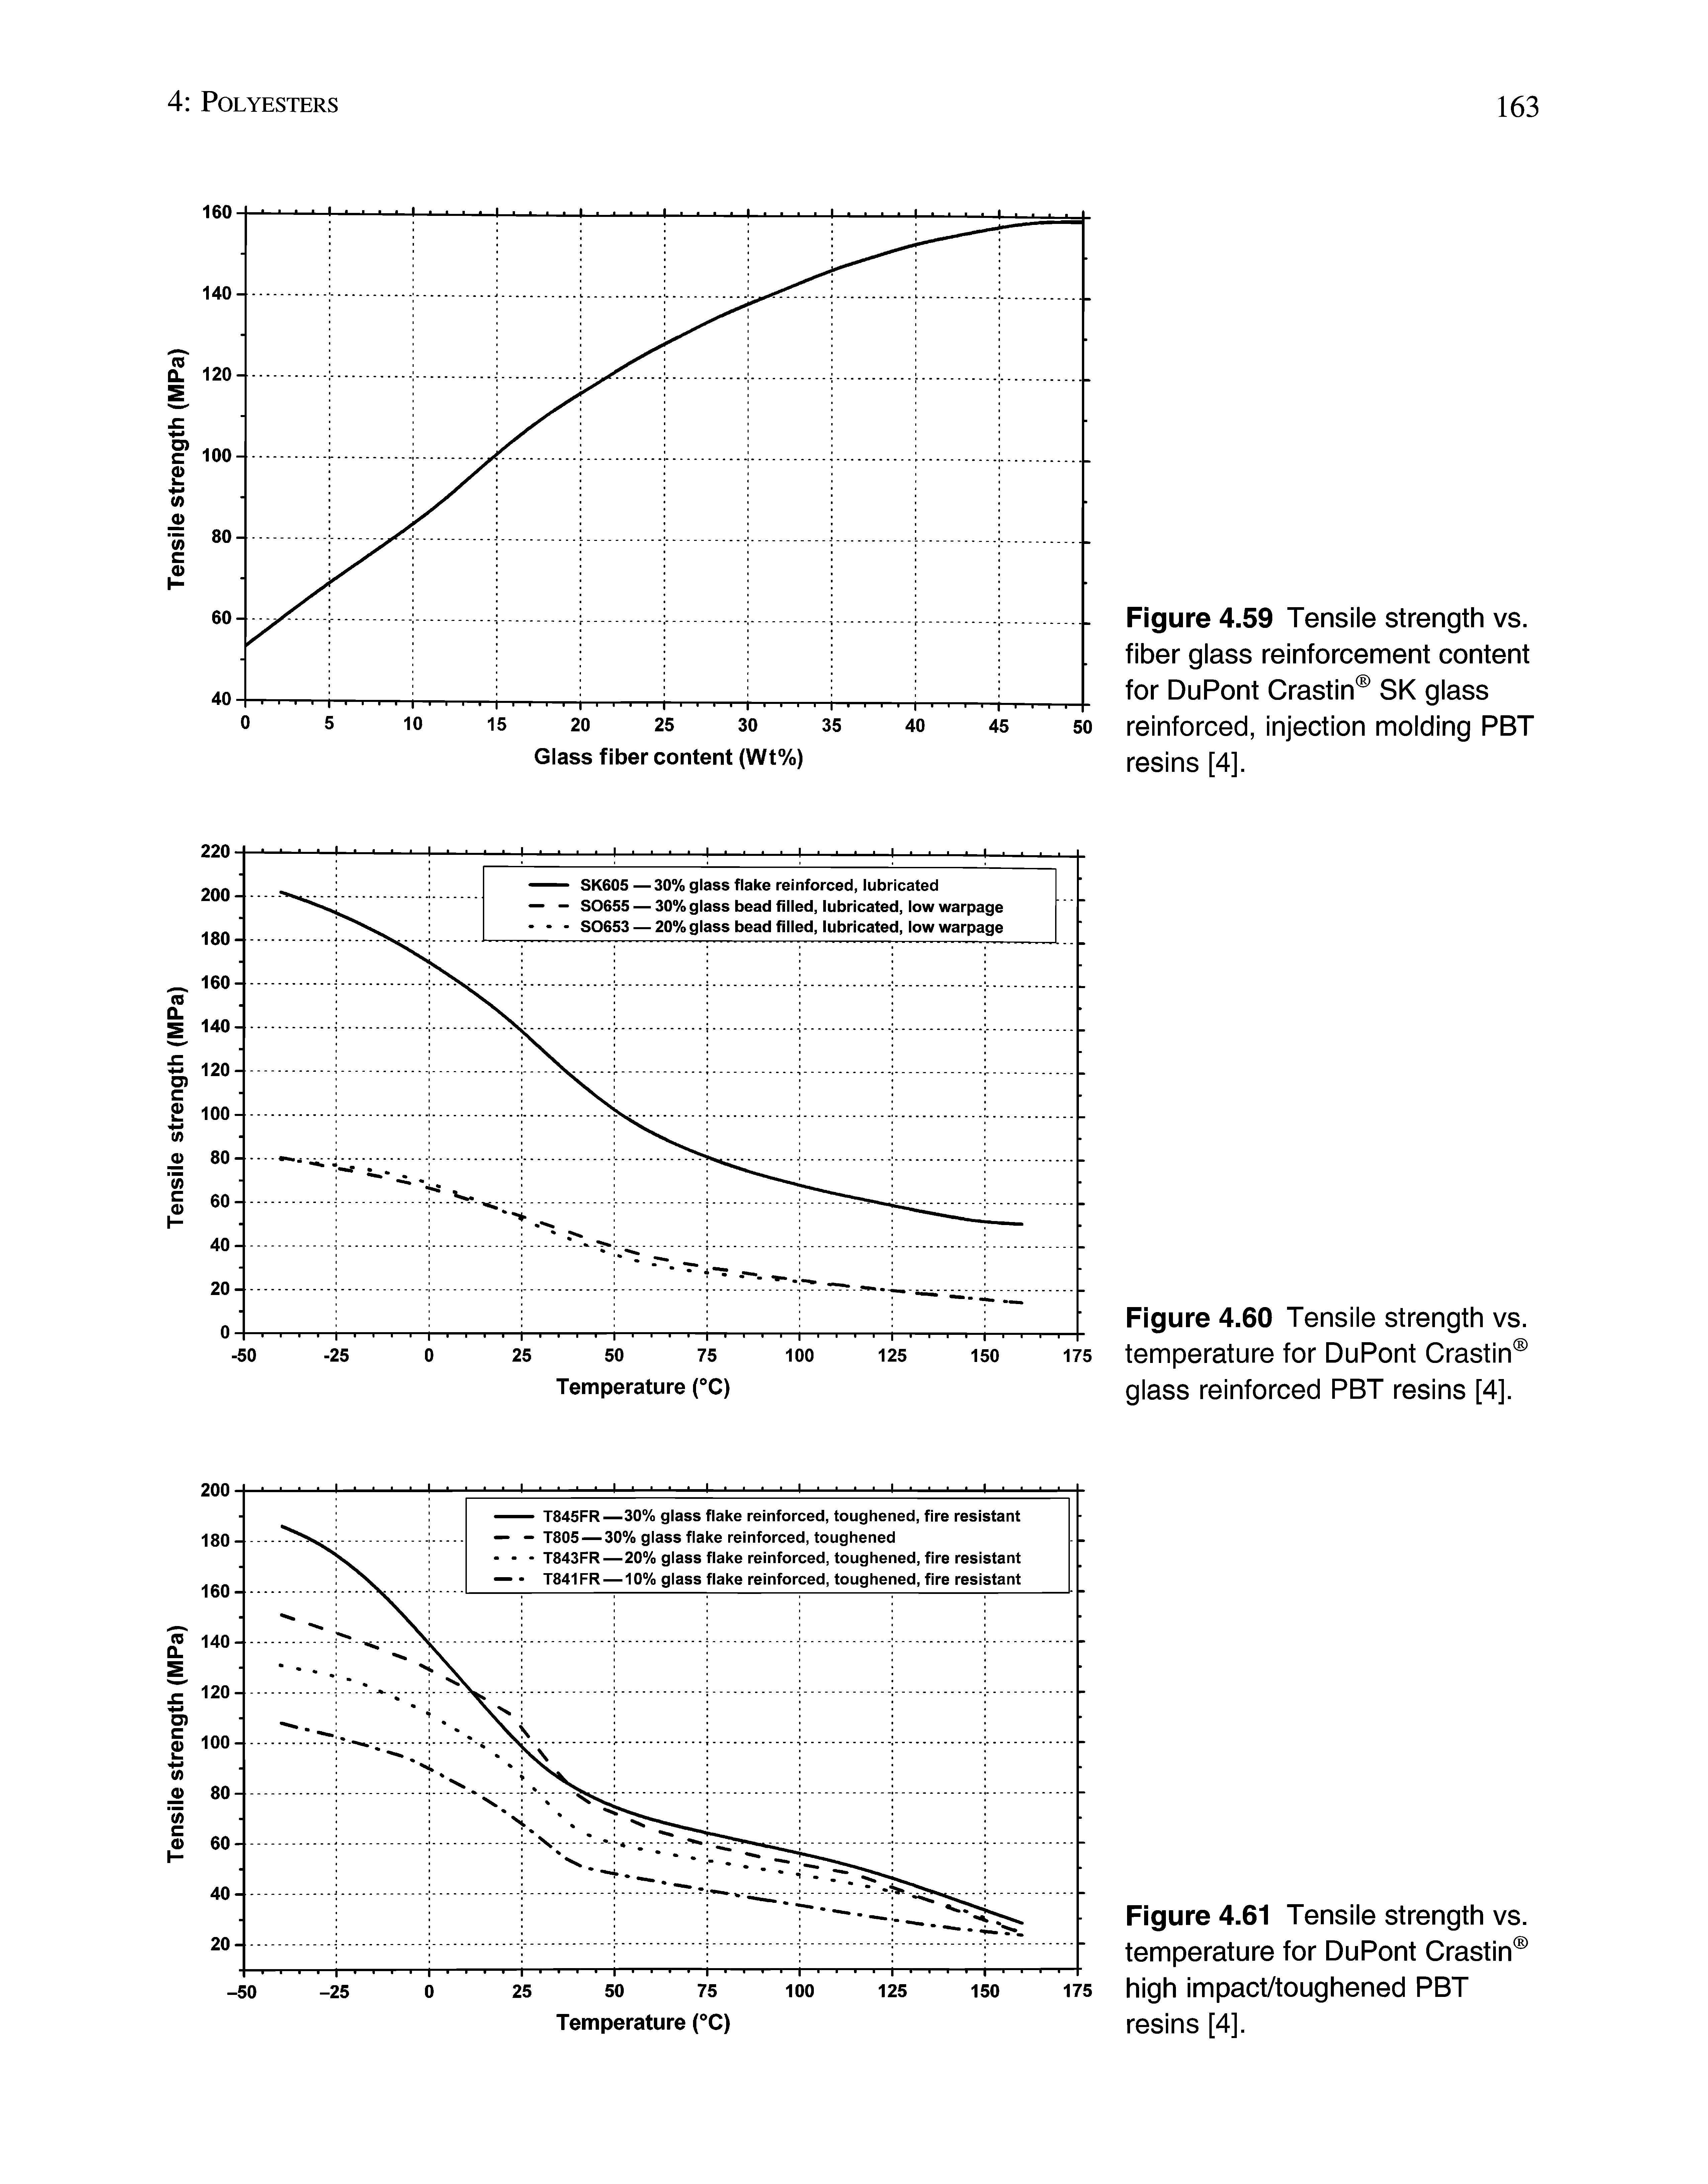 Figure 4.60 Tensile strength vs. temperature for DuPont Crastin glass reinforced PBT resins [4].